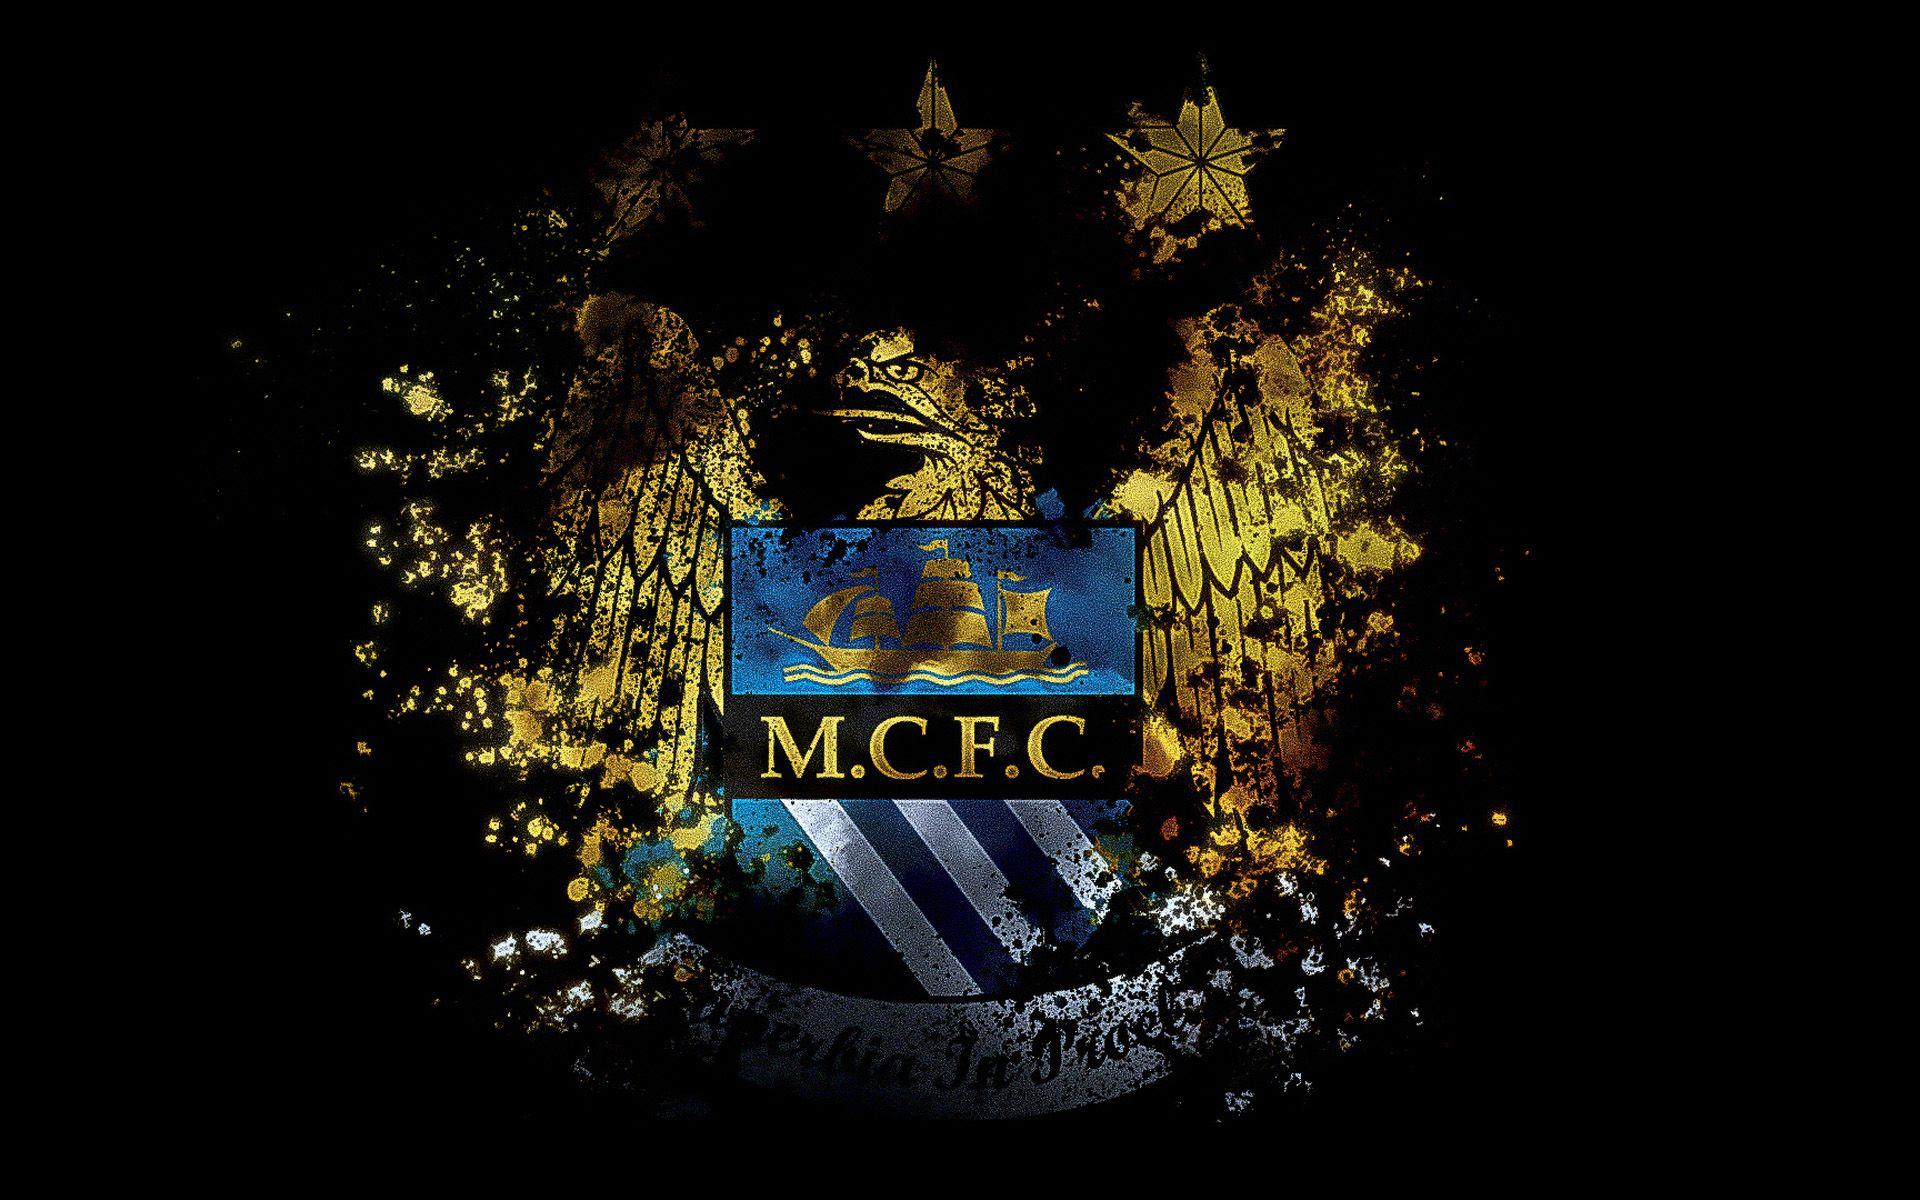 Manchester City Desktop Wallpapers - Top Free Manchester City Desktop